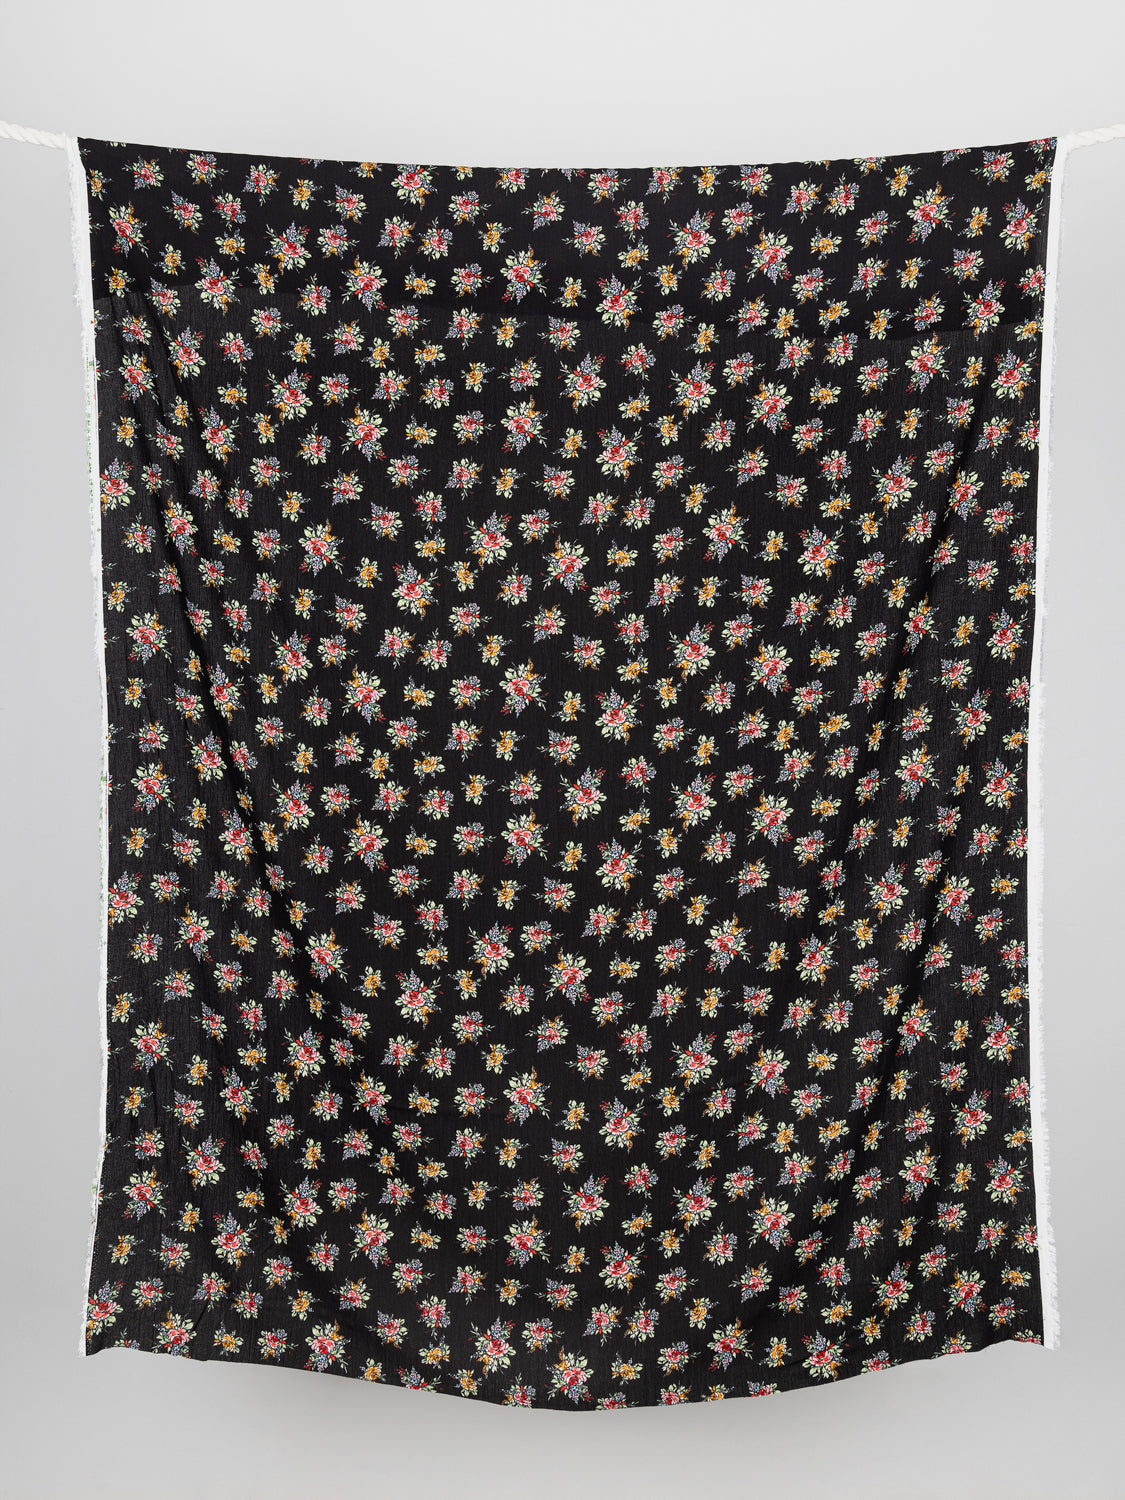 Japanese Designer Deadstock – Polyester/Viscose Stretch Crepe - Rose -  Stonemountain & Daughter Fabrics